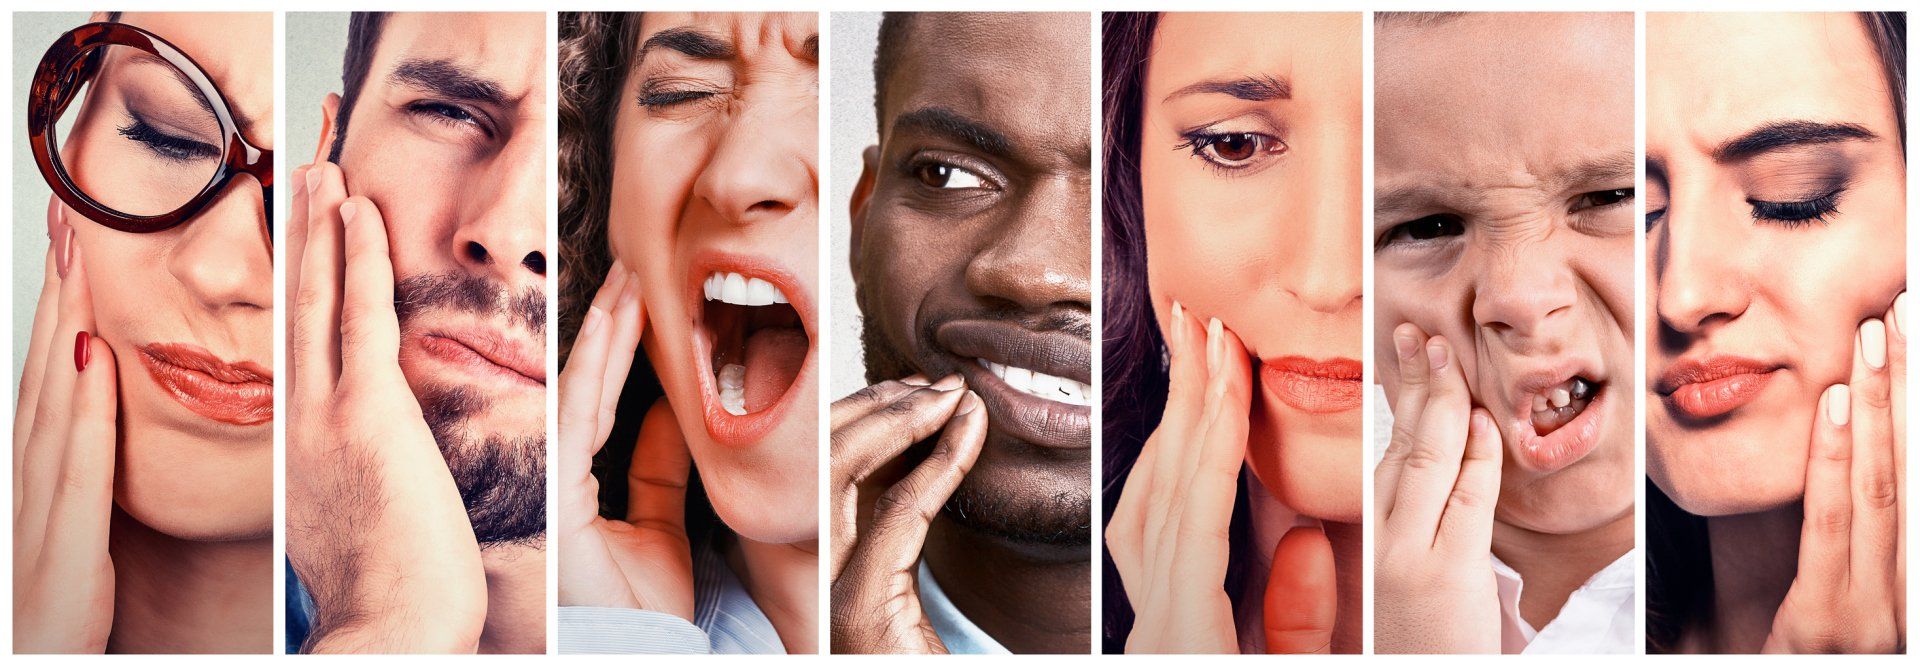 People Feeling Sensitivity and Pain in Teeth or Gums